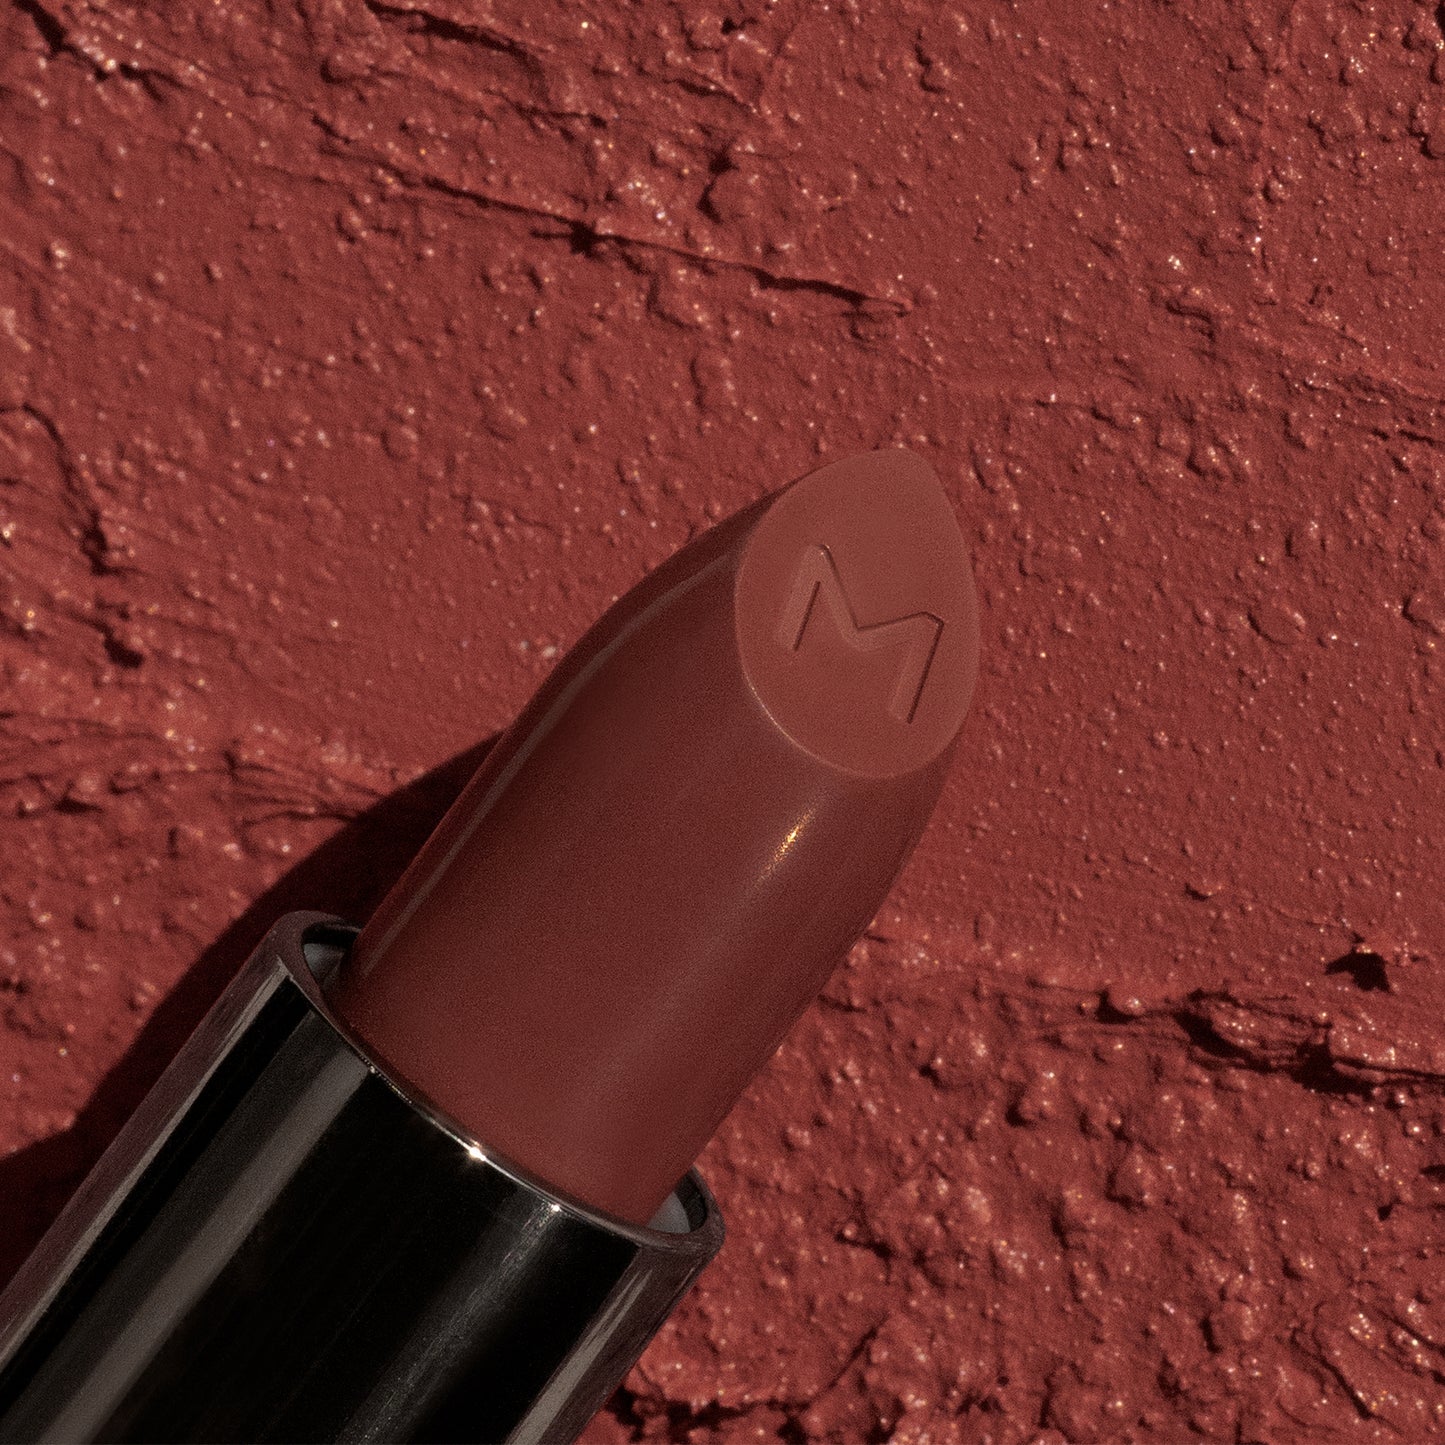 Velvet Wear Lipsticks 3.8g - #32 Warm Nude